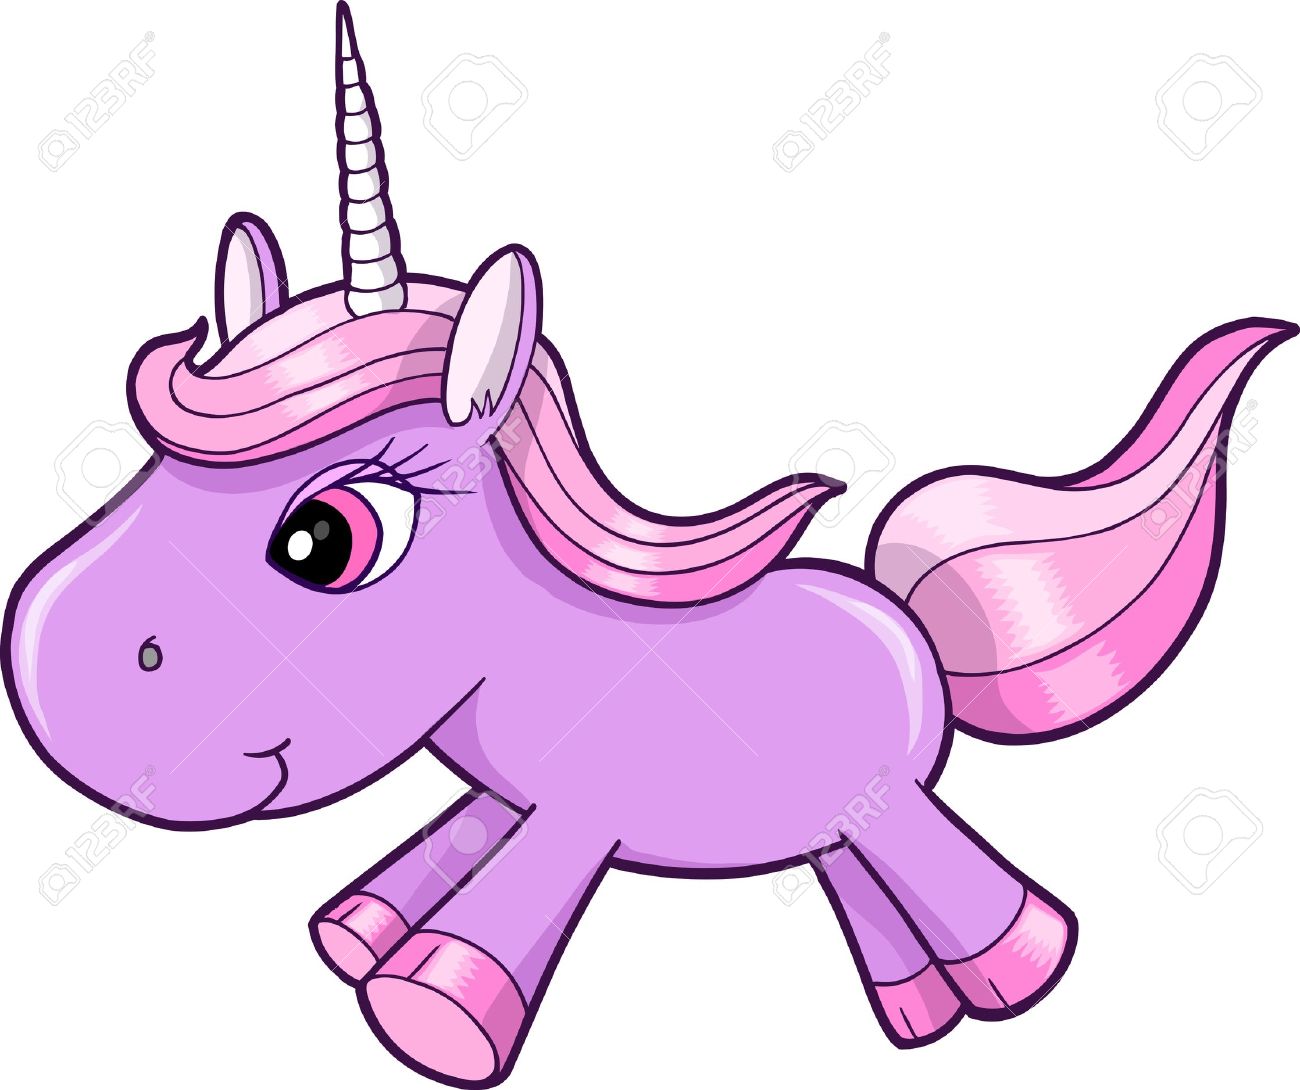 File:Baby unicorn 